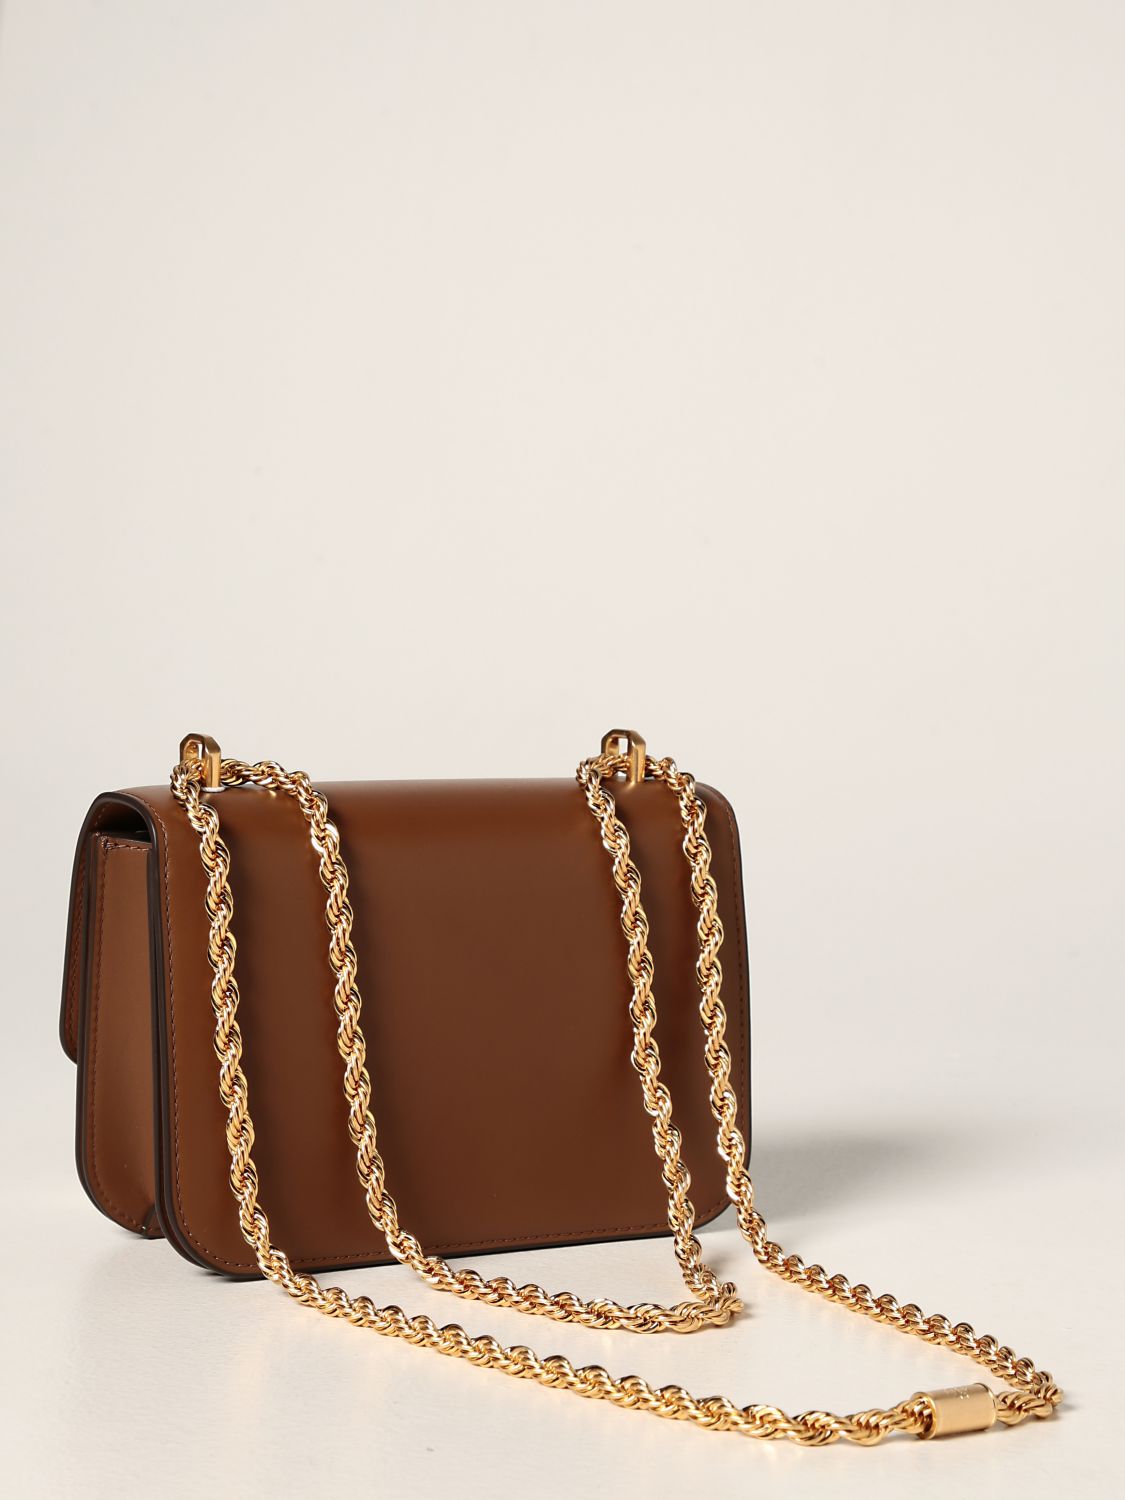 TORY BURCH: Small Eleanor leather bag - Brown | Tory Burch mini bag ...